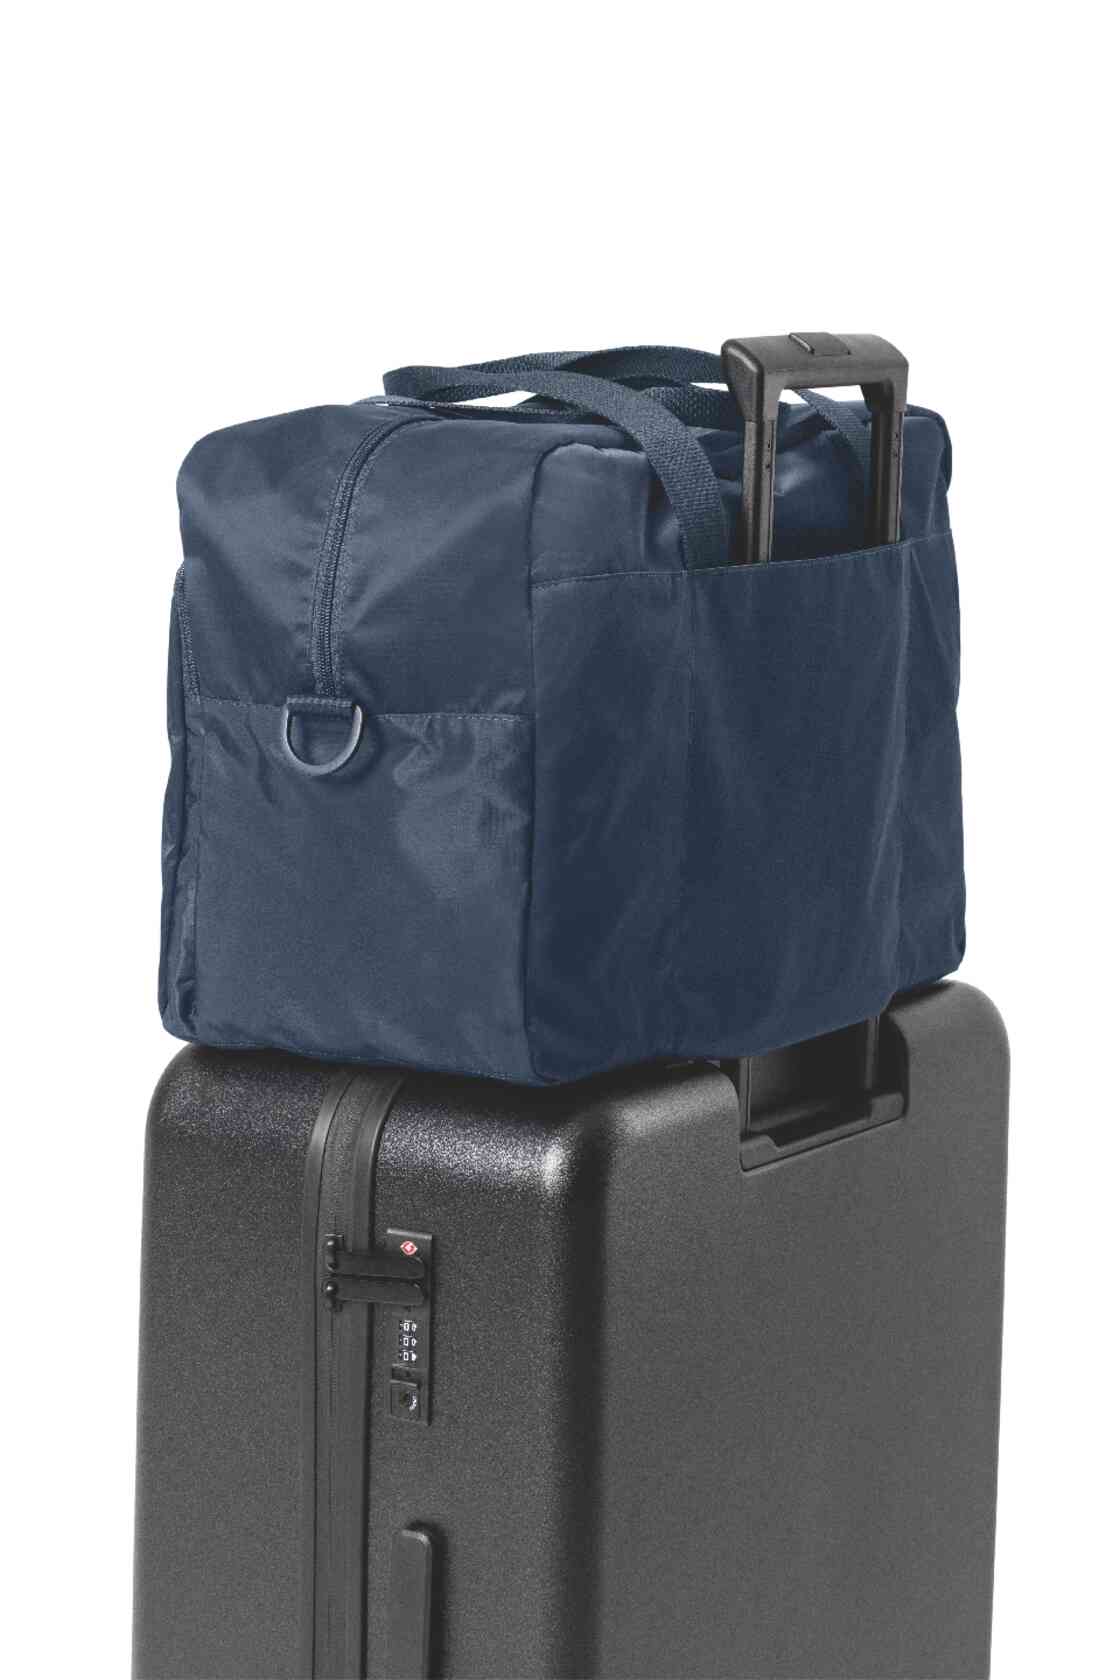 Mini Soft Wing Logo Traveler Bag Indigo 